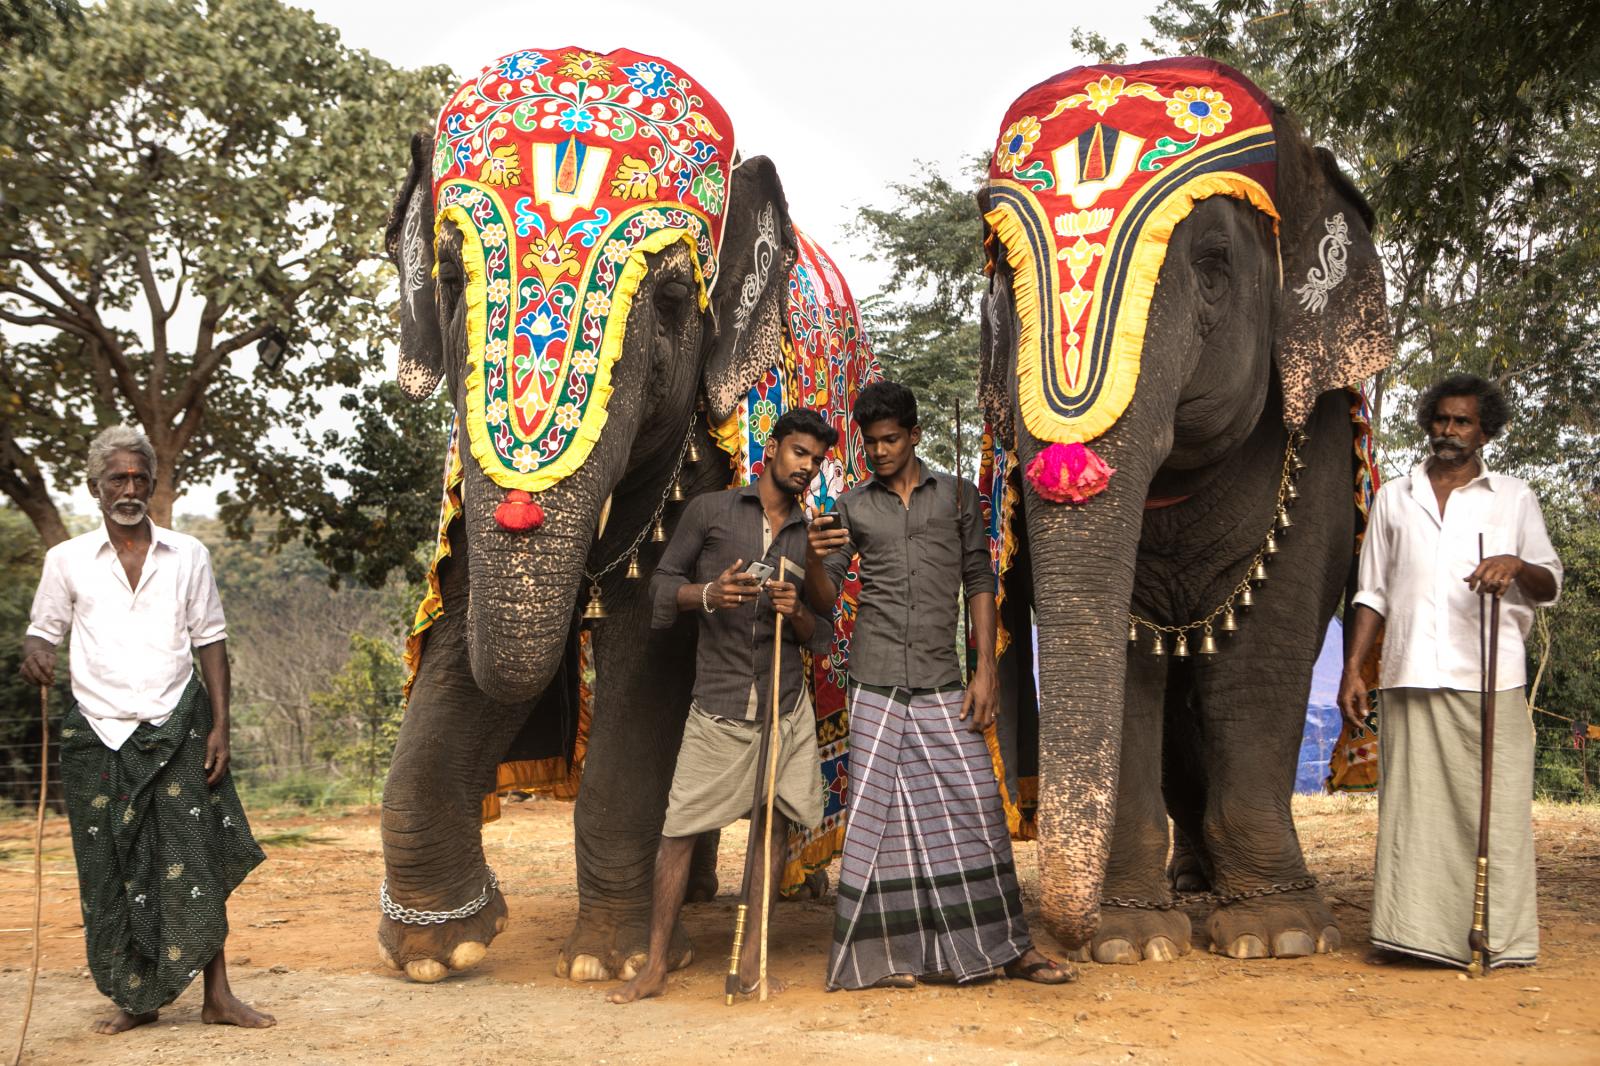 Temple elephant rejuvenation camp-DER SPIEGEL  - 